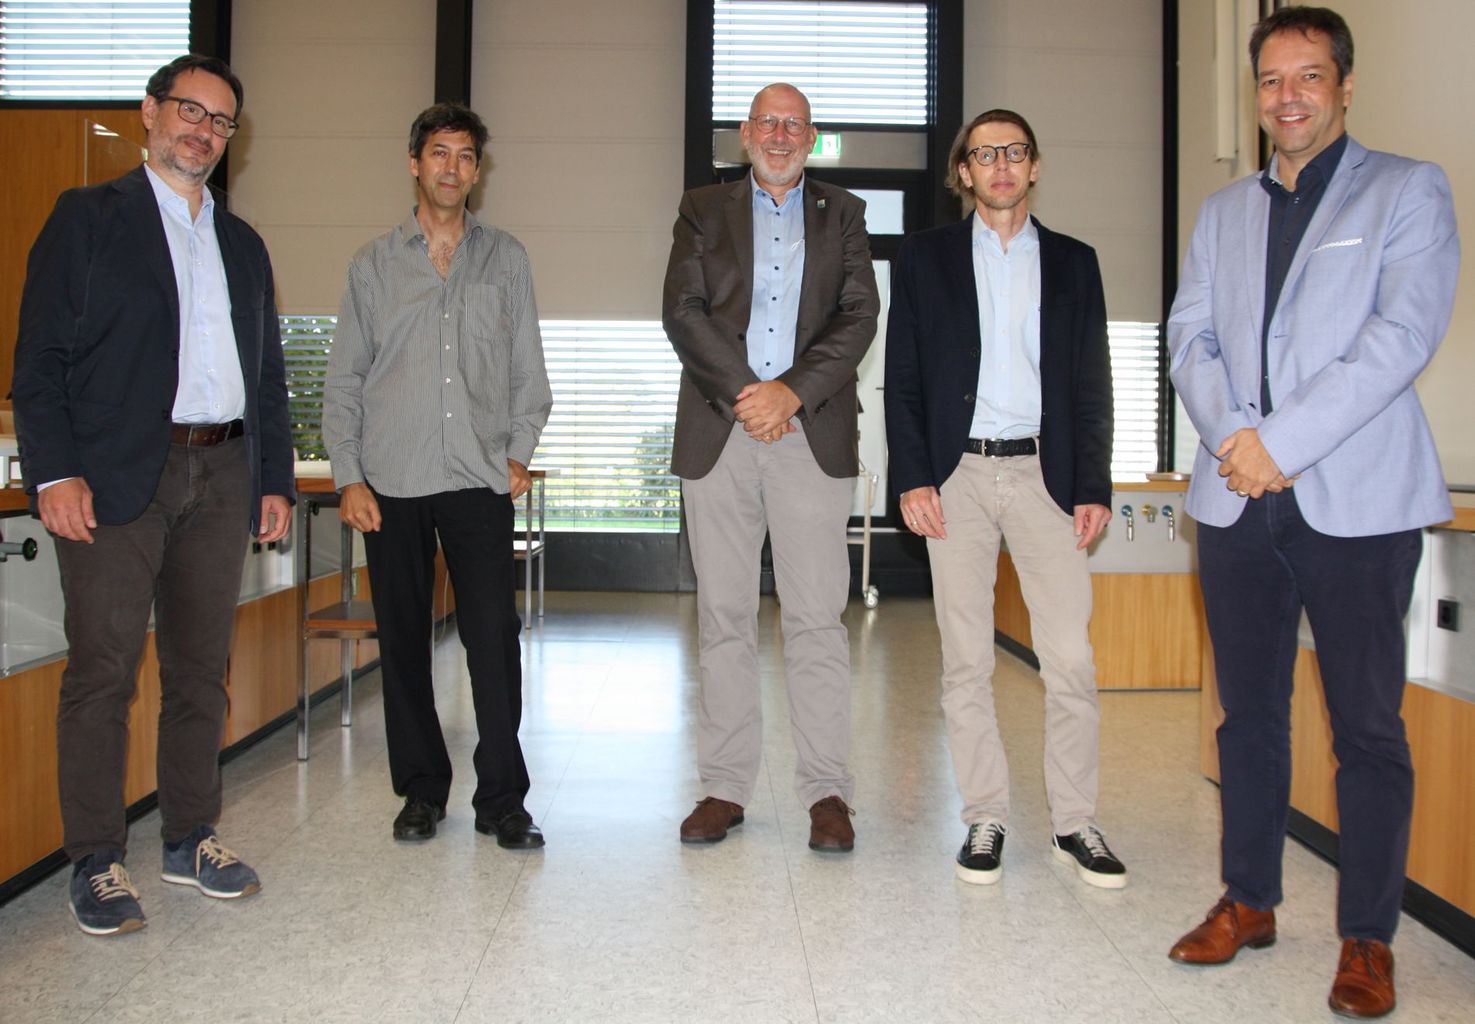 The five speakers of the Röntgen Symposium 2021 (from left to right): Davide Bleiner, Stéphane Paltani, Ralph Claessen, Clemens Schulze-Briese, Marco Stampanoni